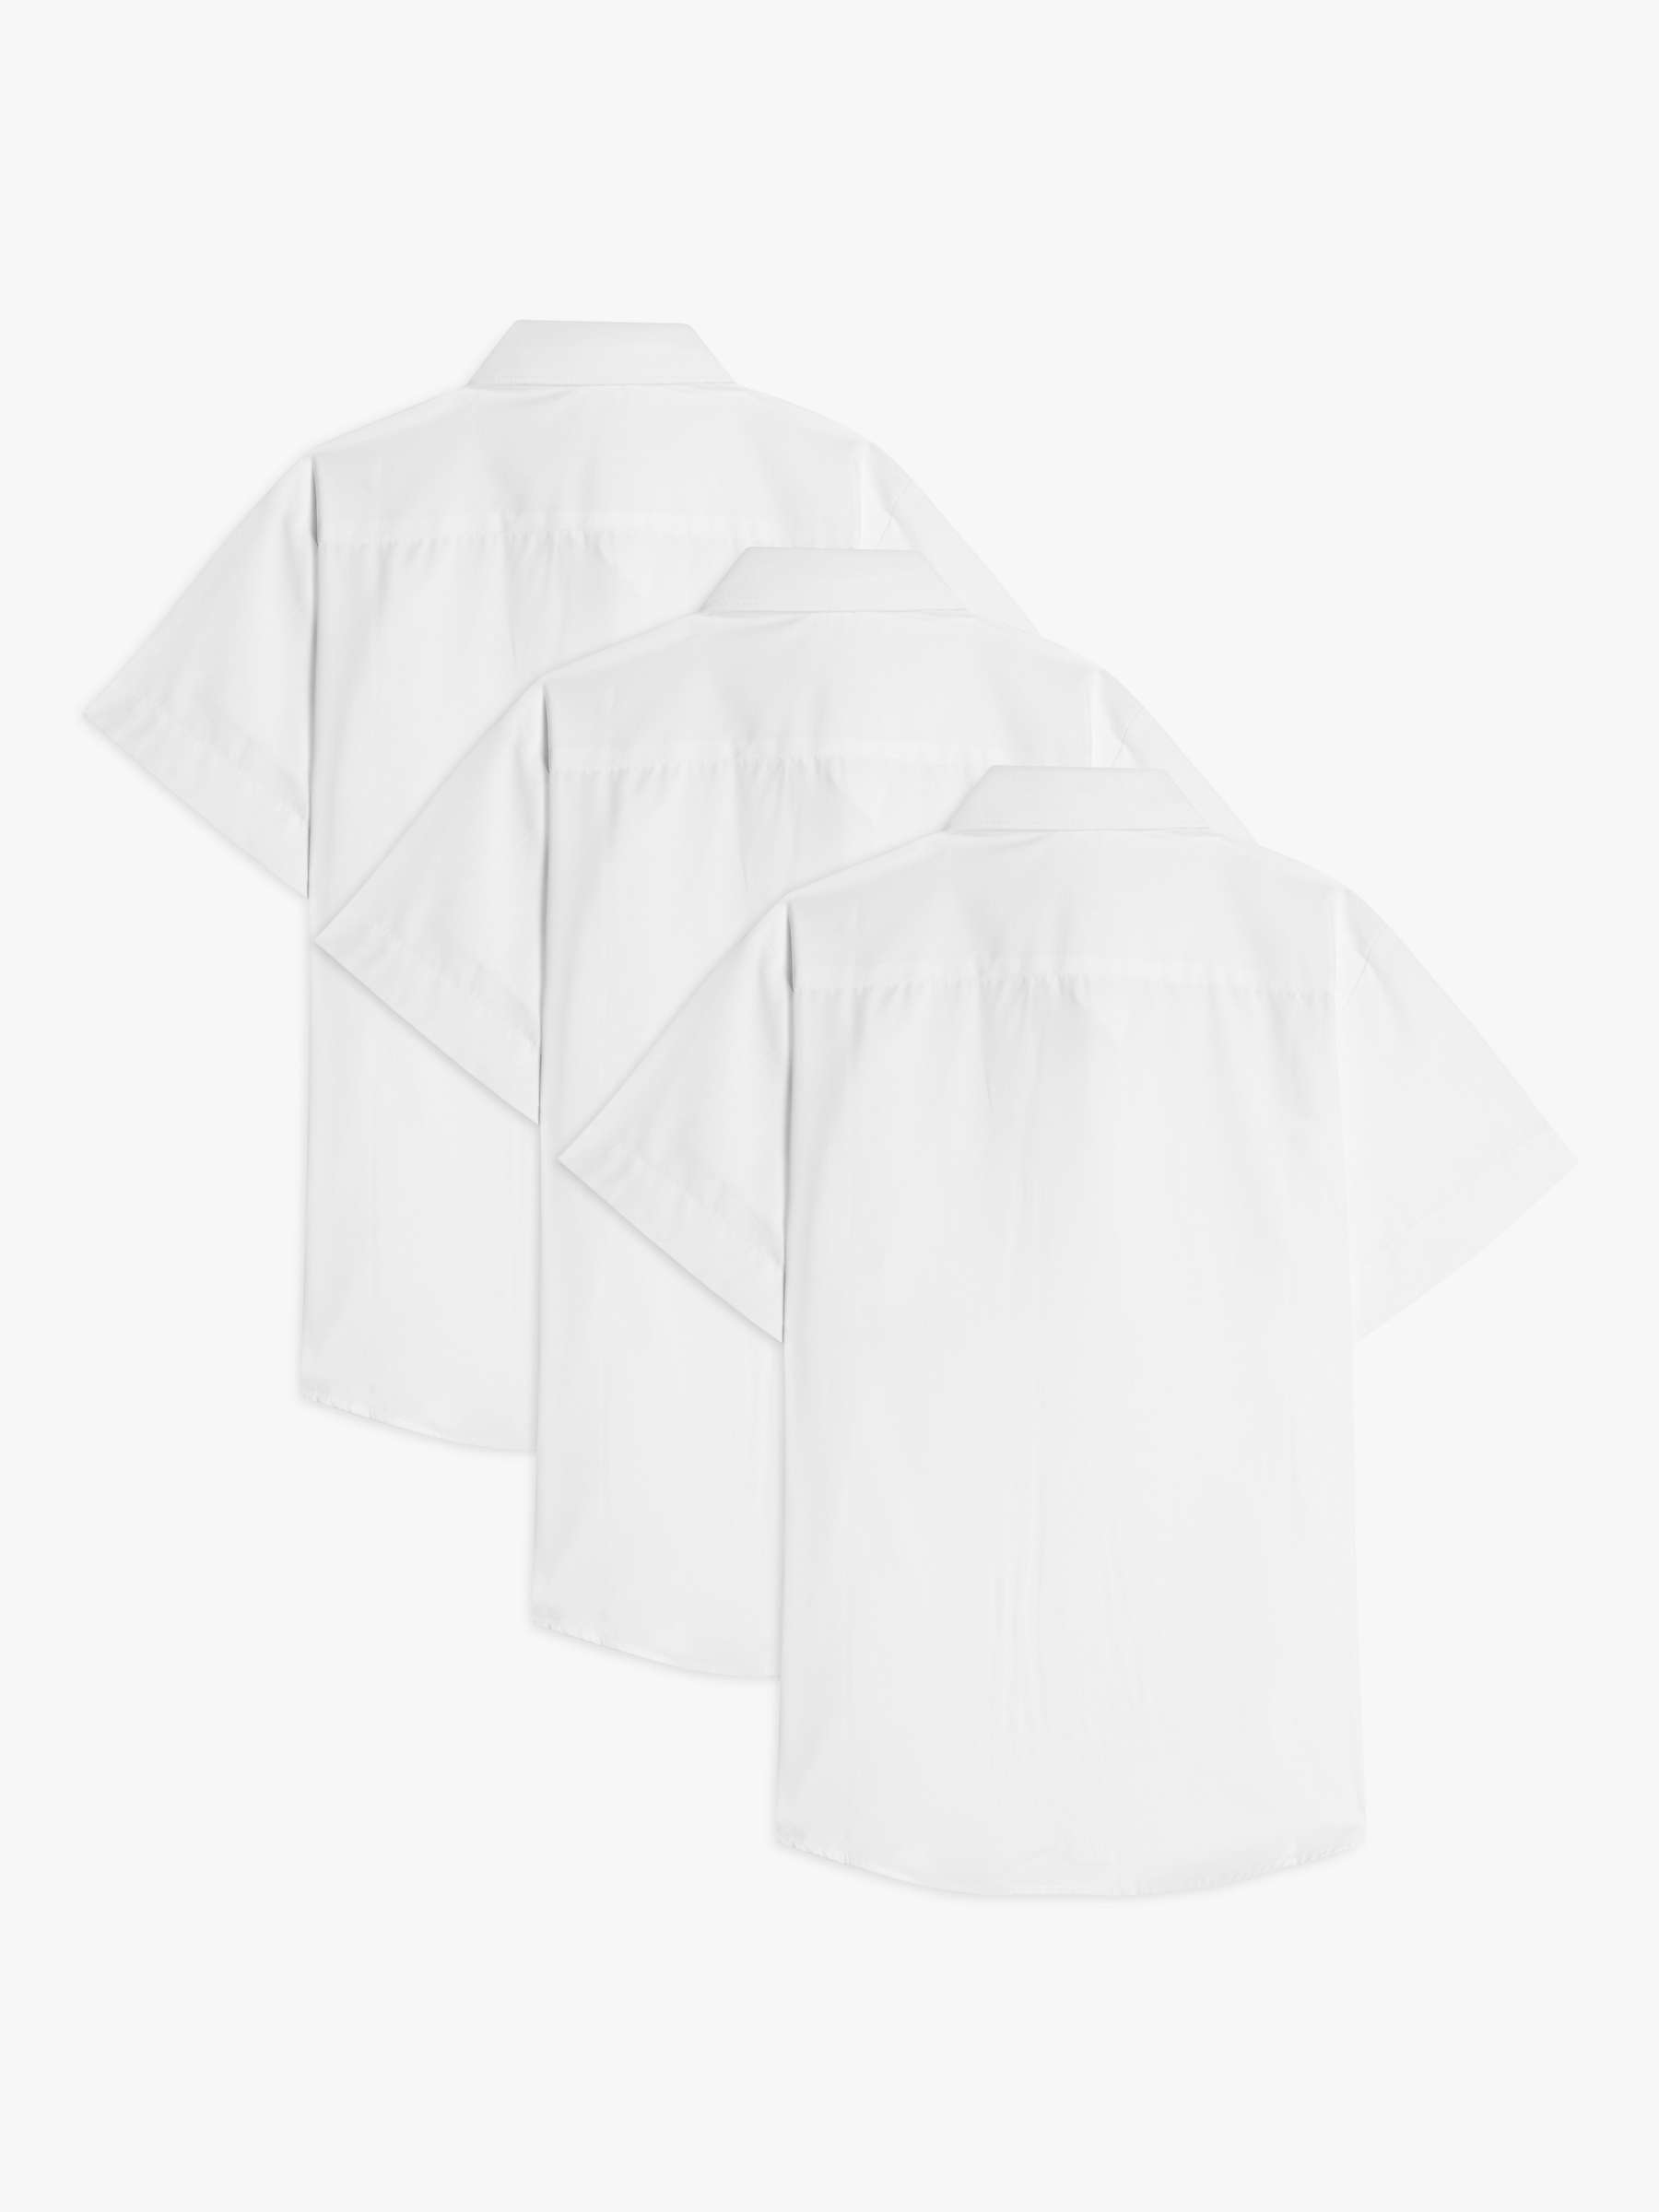 Buy John Lewis ANYDAY The Basics Boys' Short Sleeved Shirt, Pack of 3, White Online at johnlewis.com